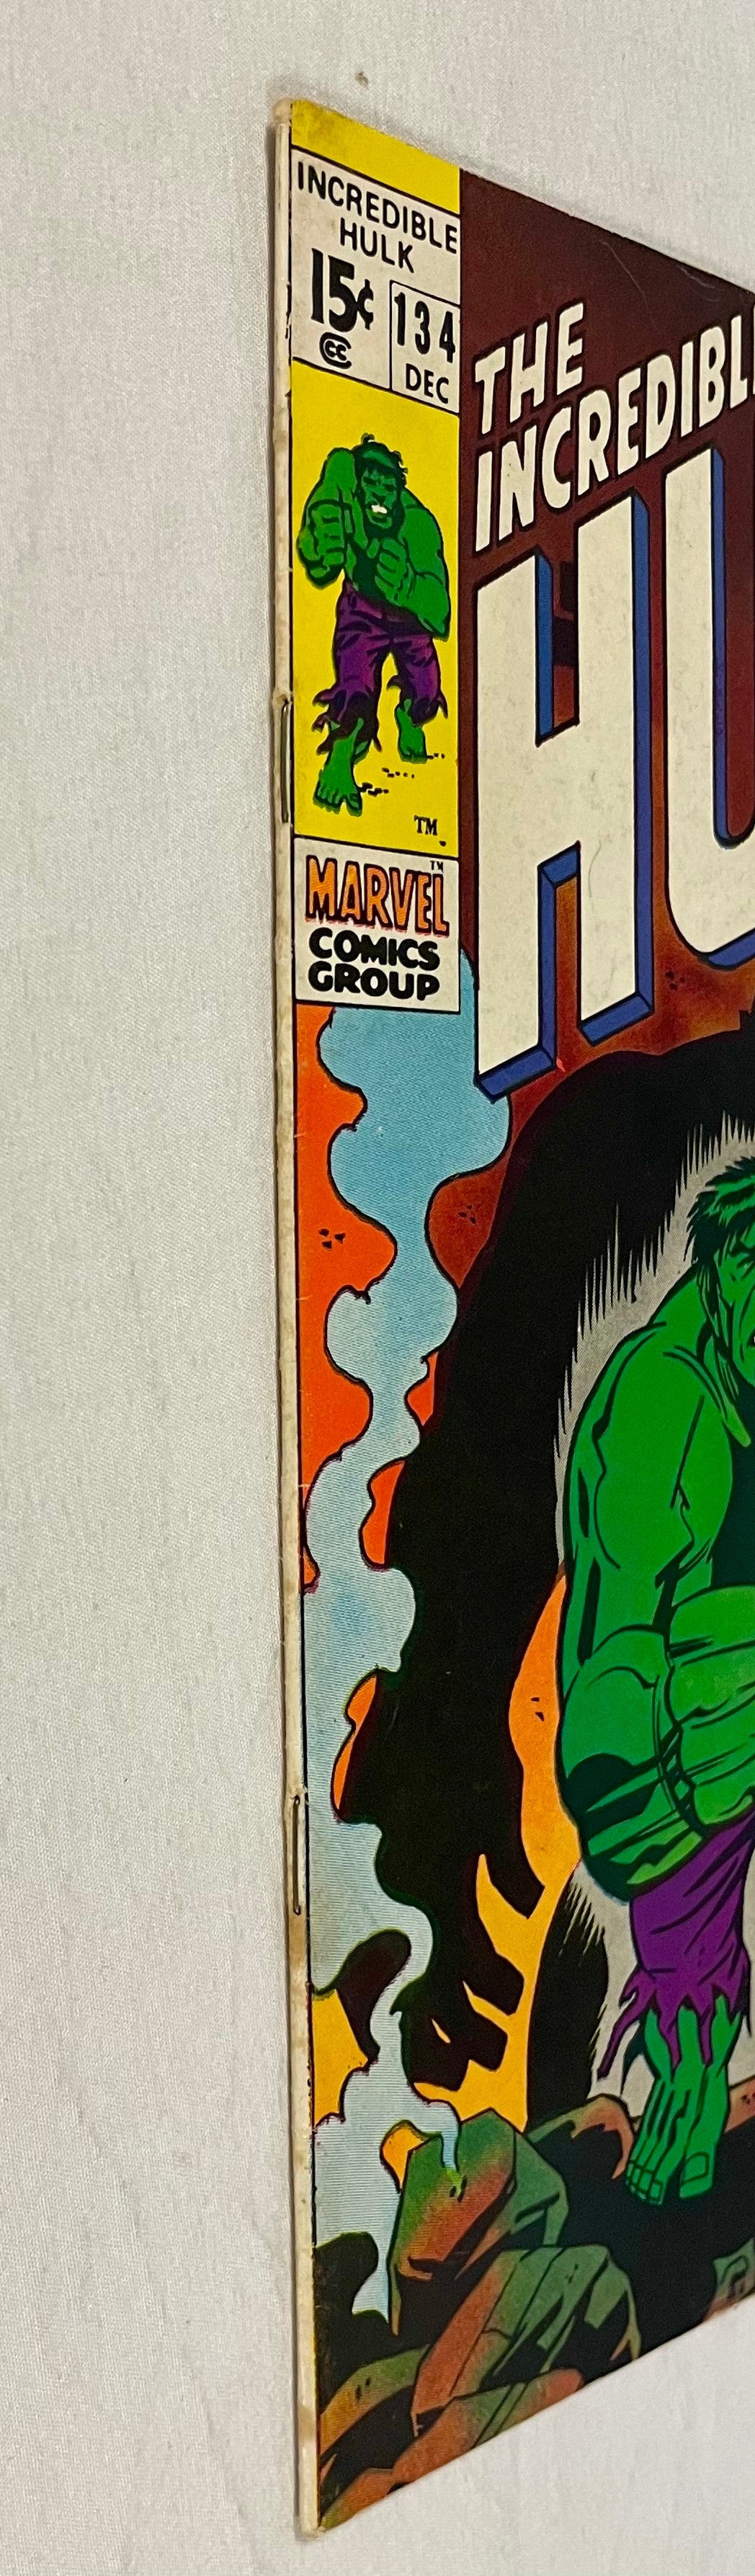 Marvel Comics: The Incredible Hulk #134